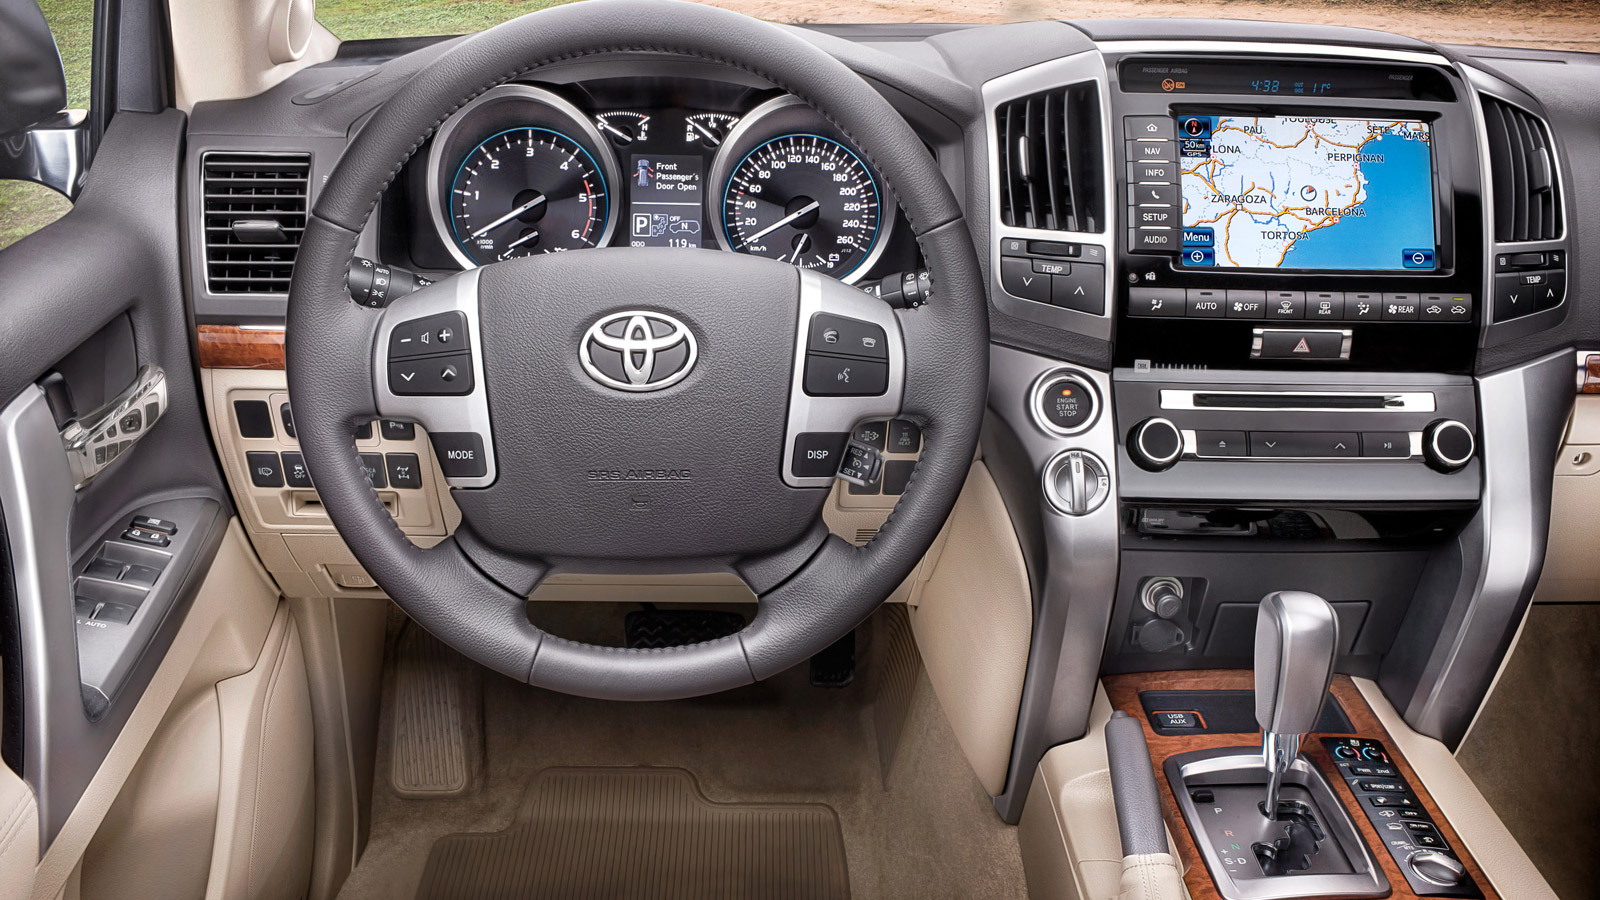 2013 Toyota Land Cruiser (European model pictured)